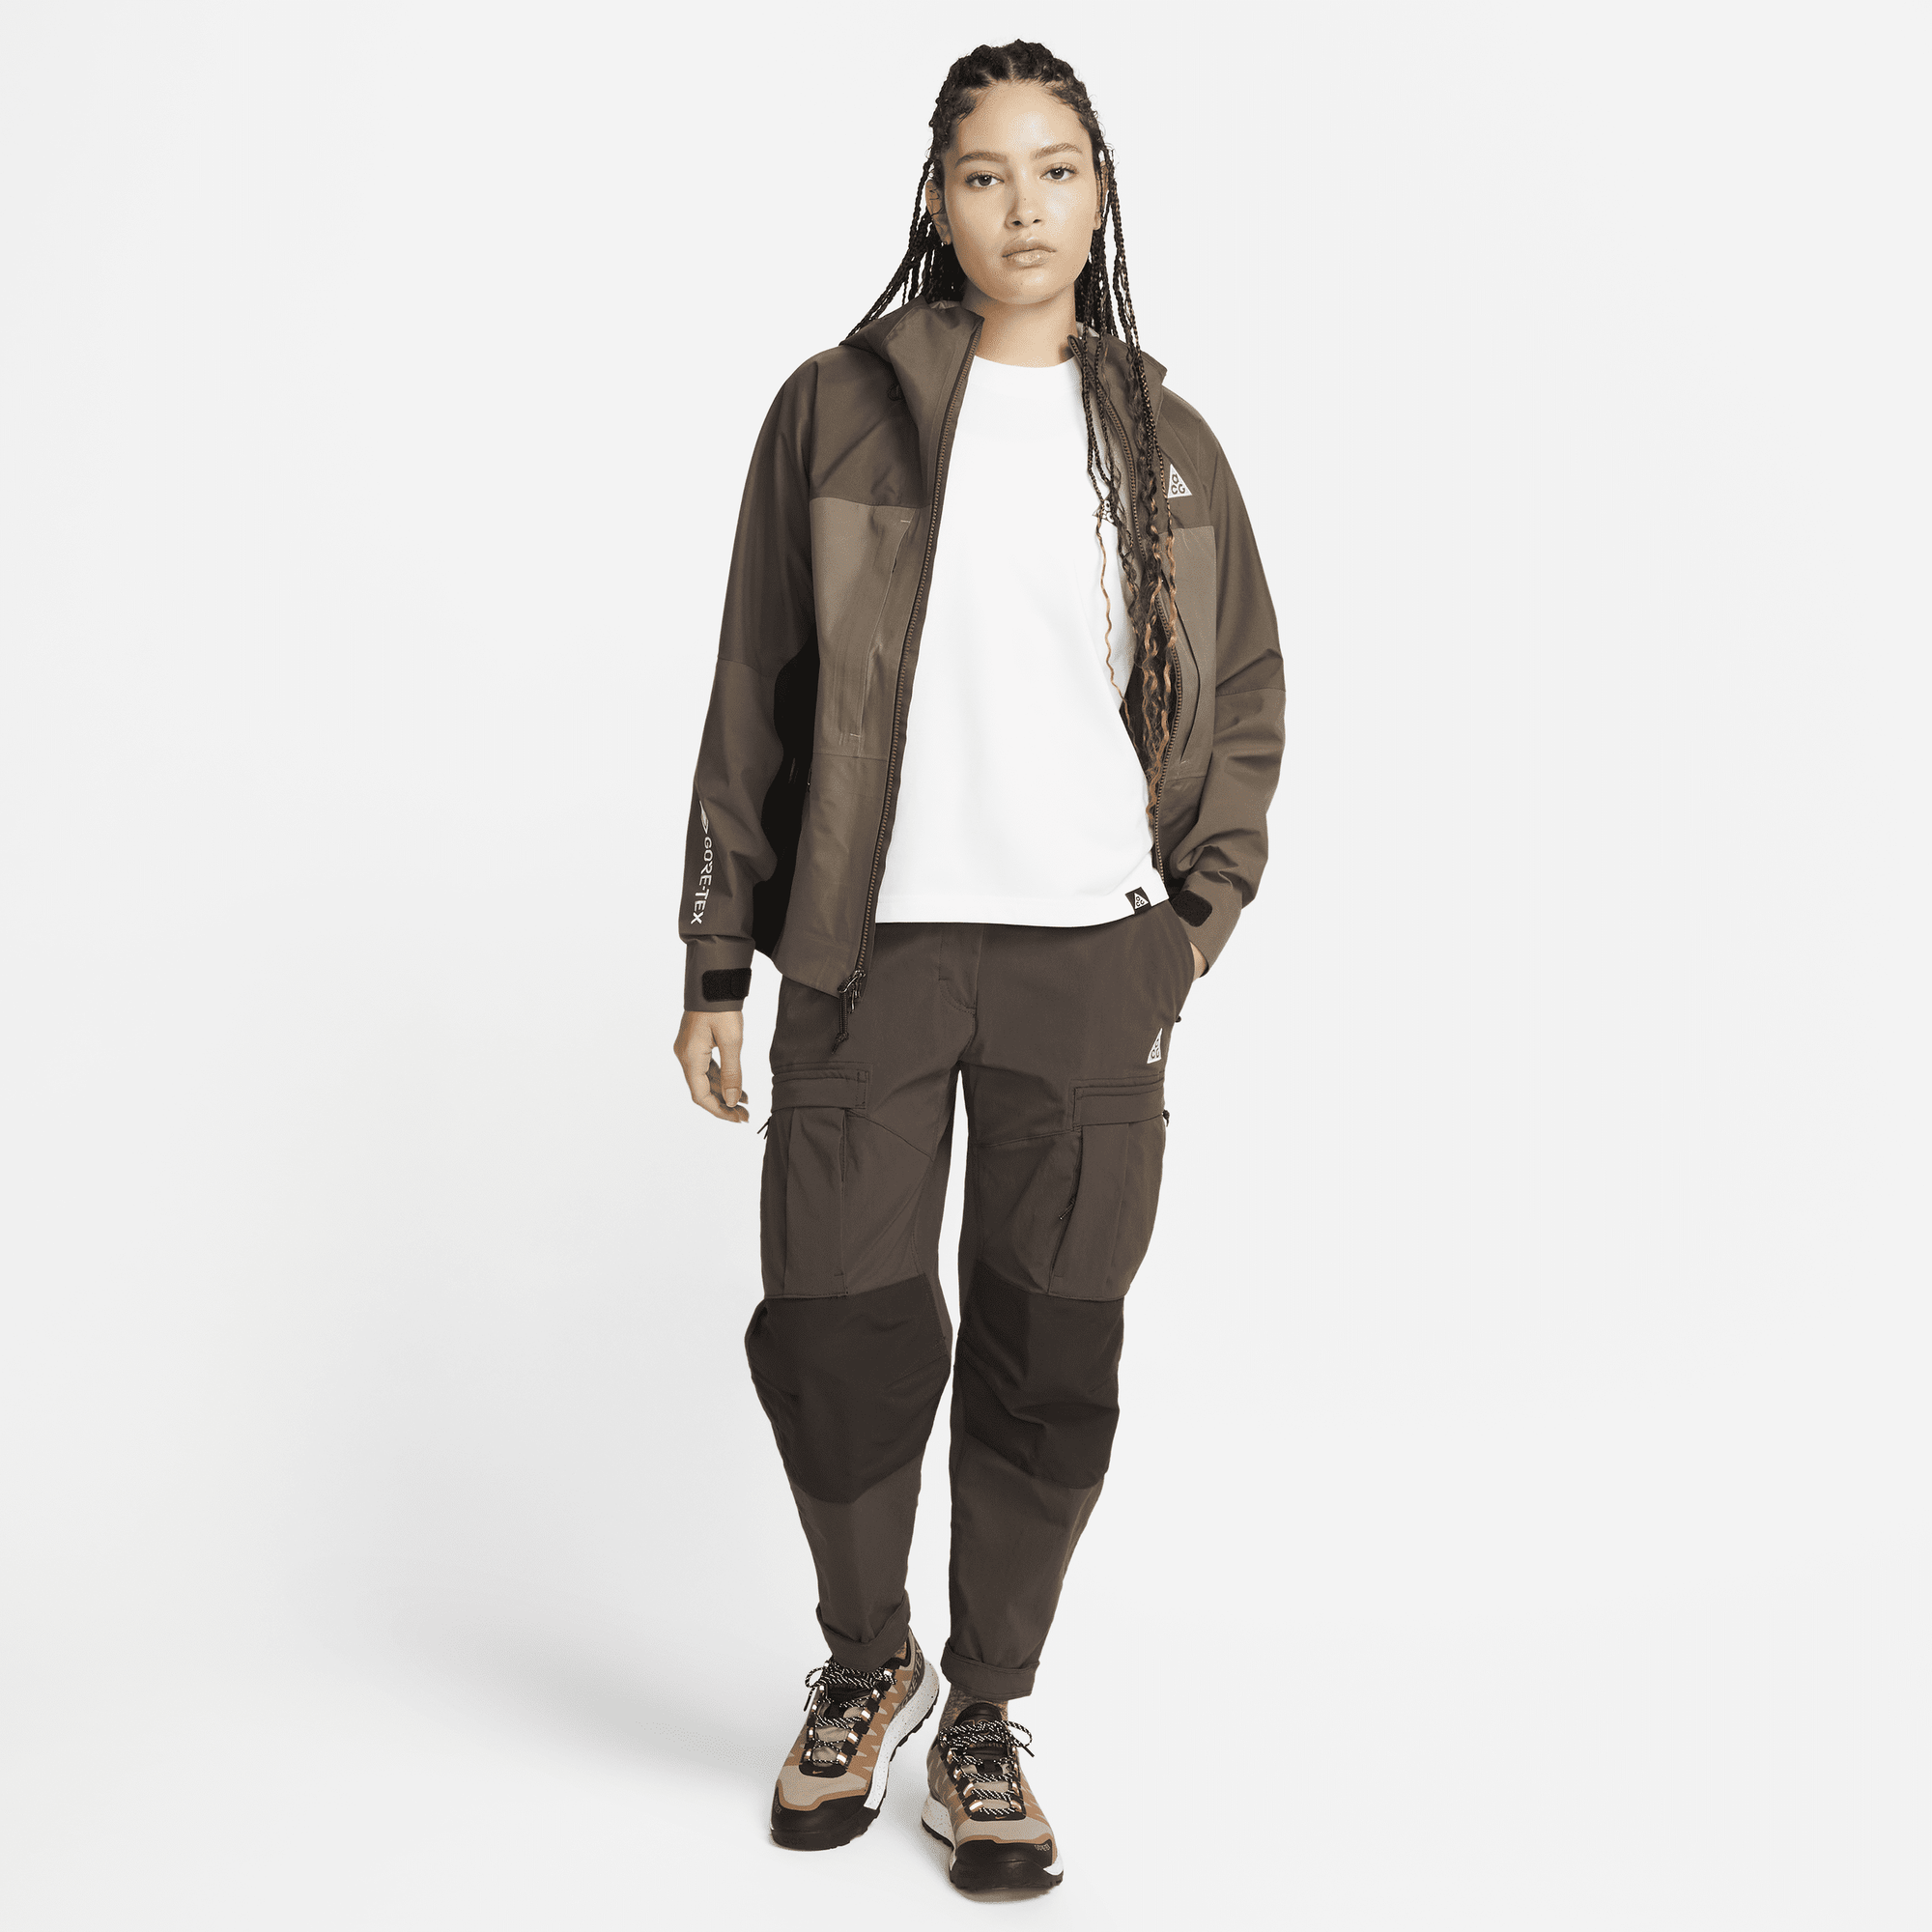 Shop ACG Storm-FIT ADV 'Misery Ridge' Women's Jacket | Nike UAE